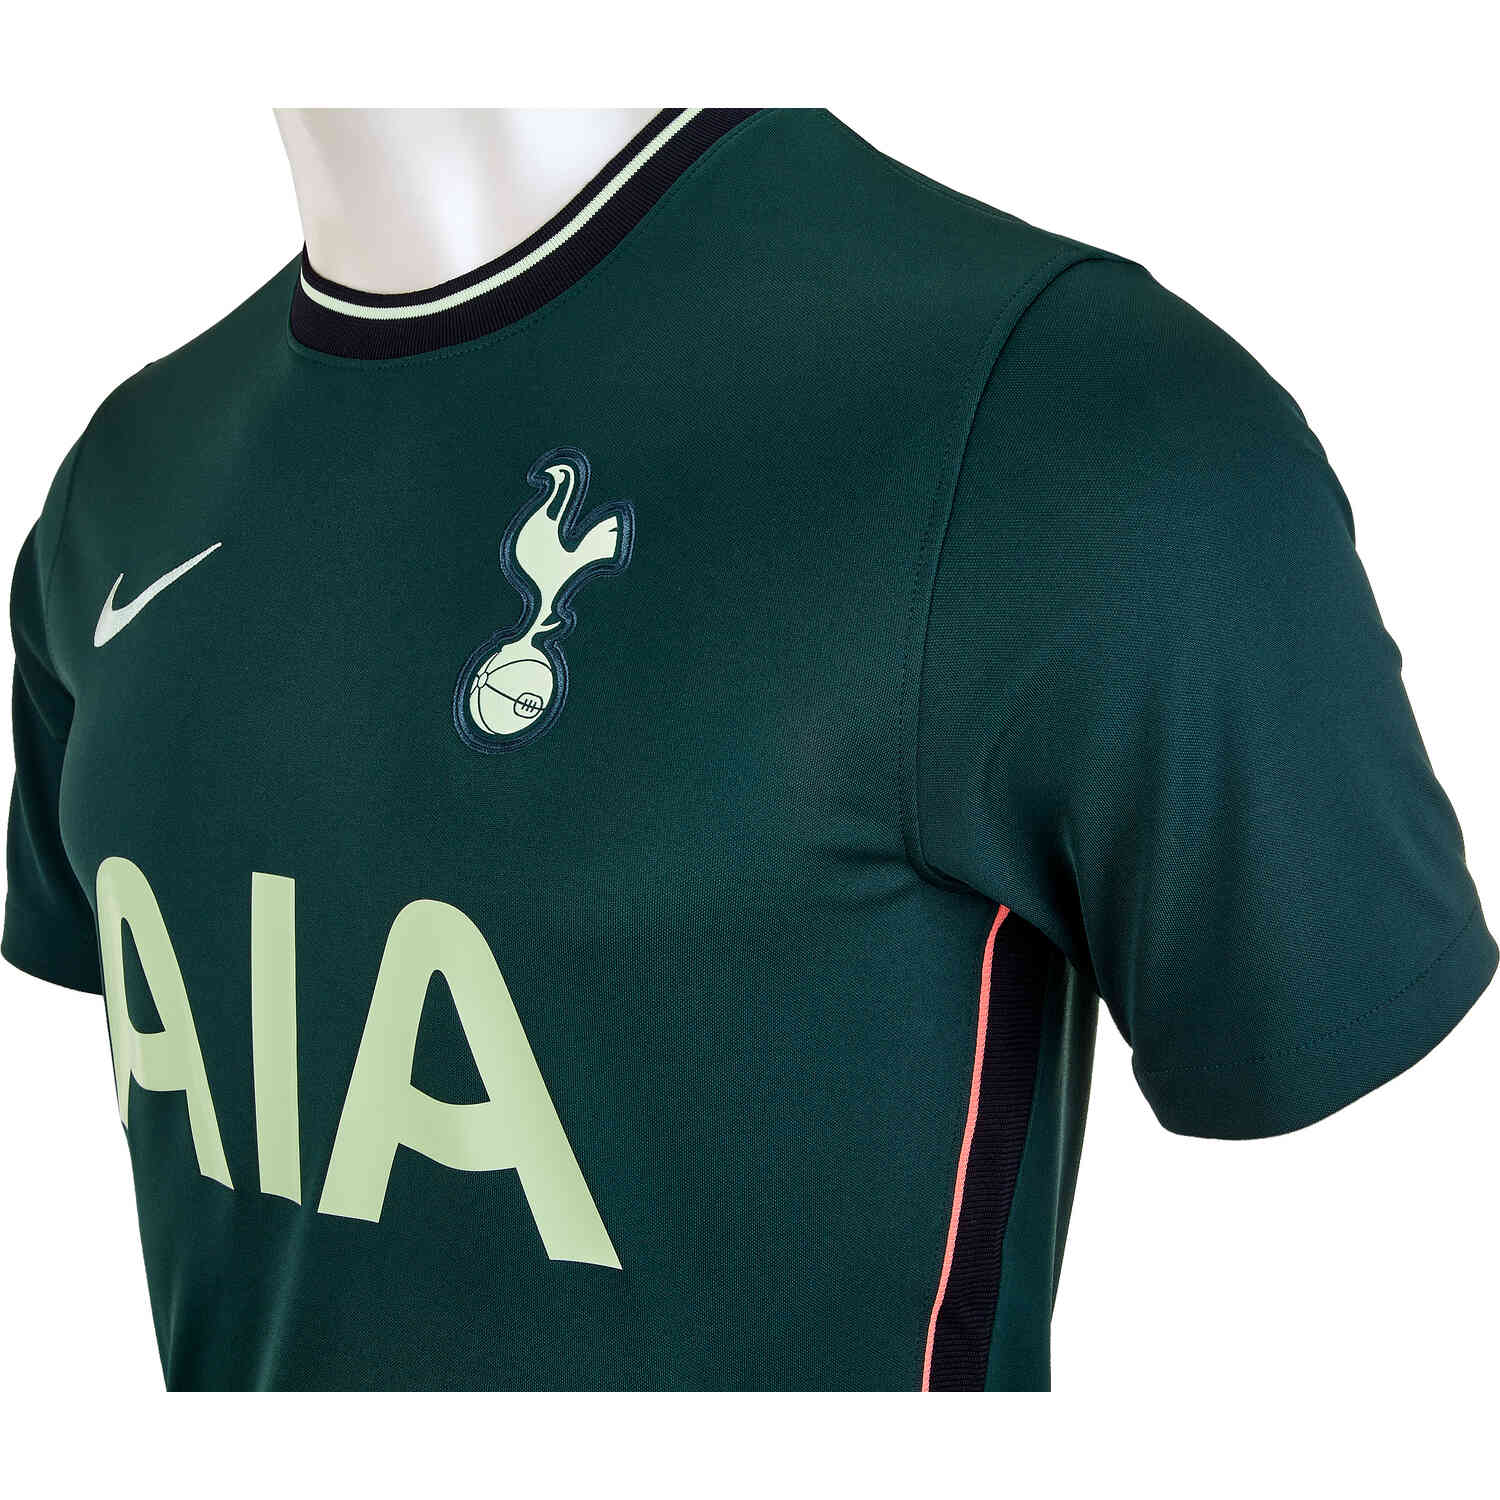 Tottenham Hotspur 2020/21 Nike Home and Away Kits - FOOTBALL FASHION